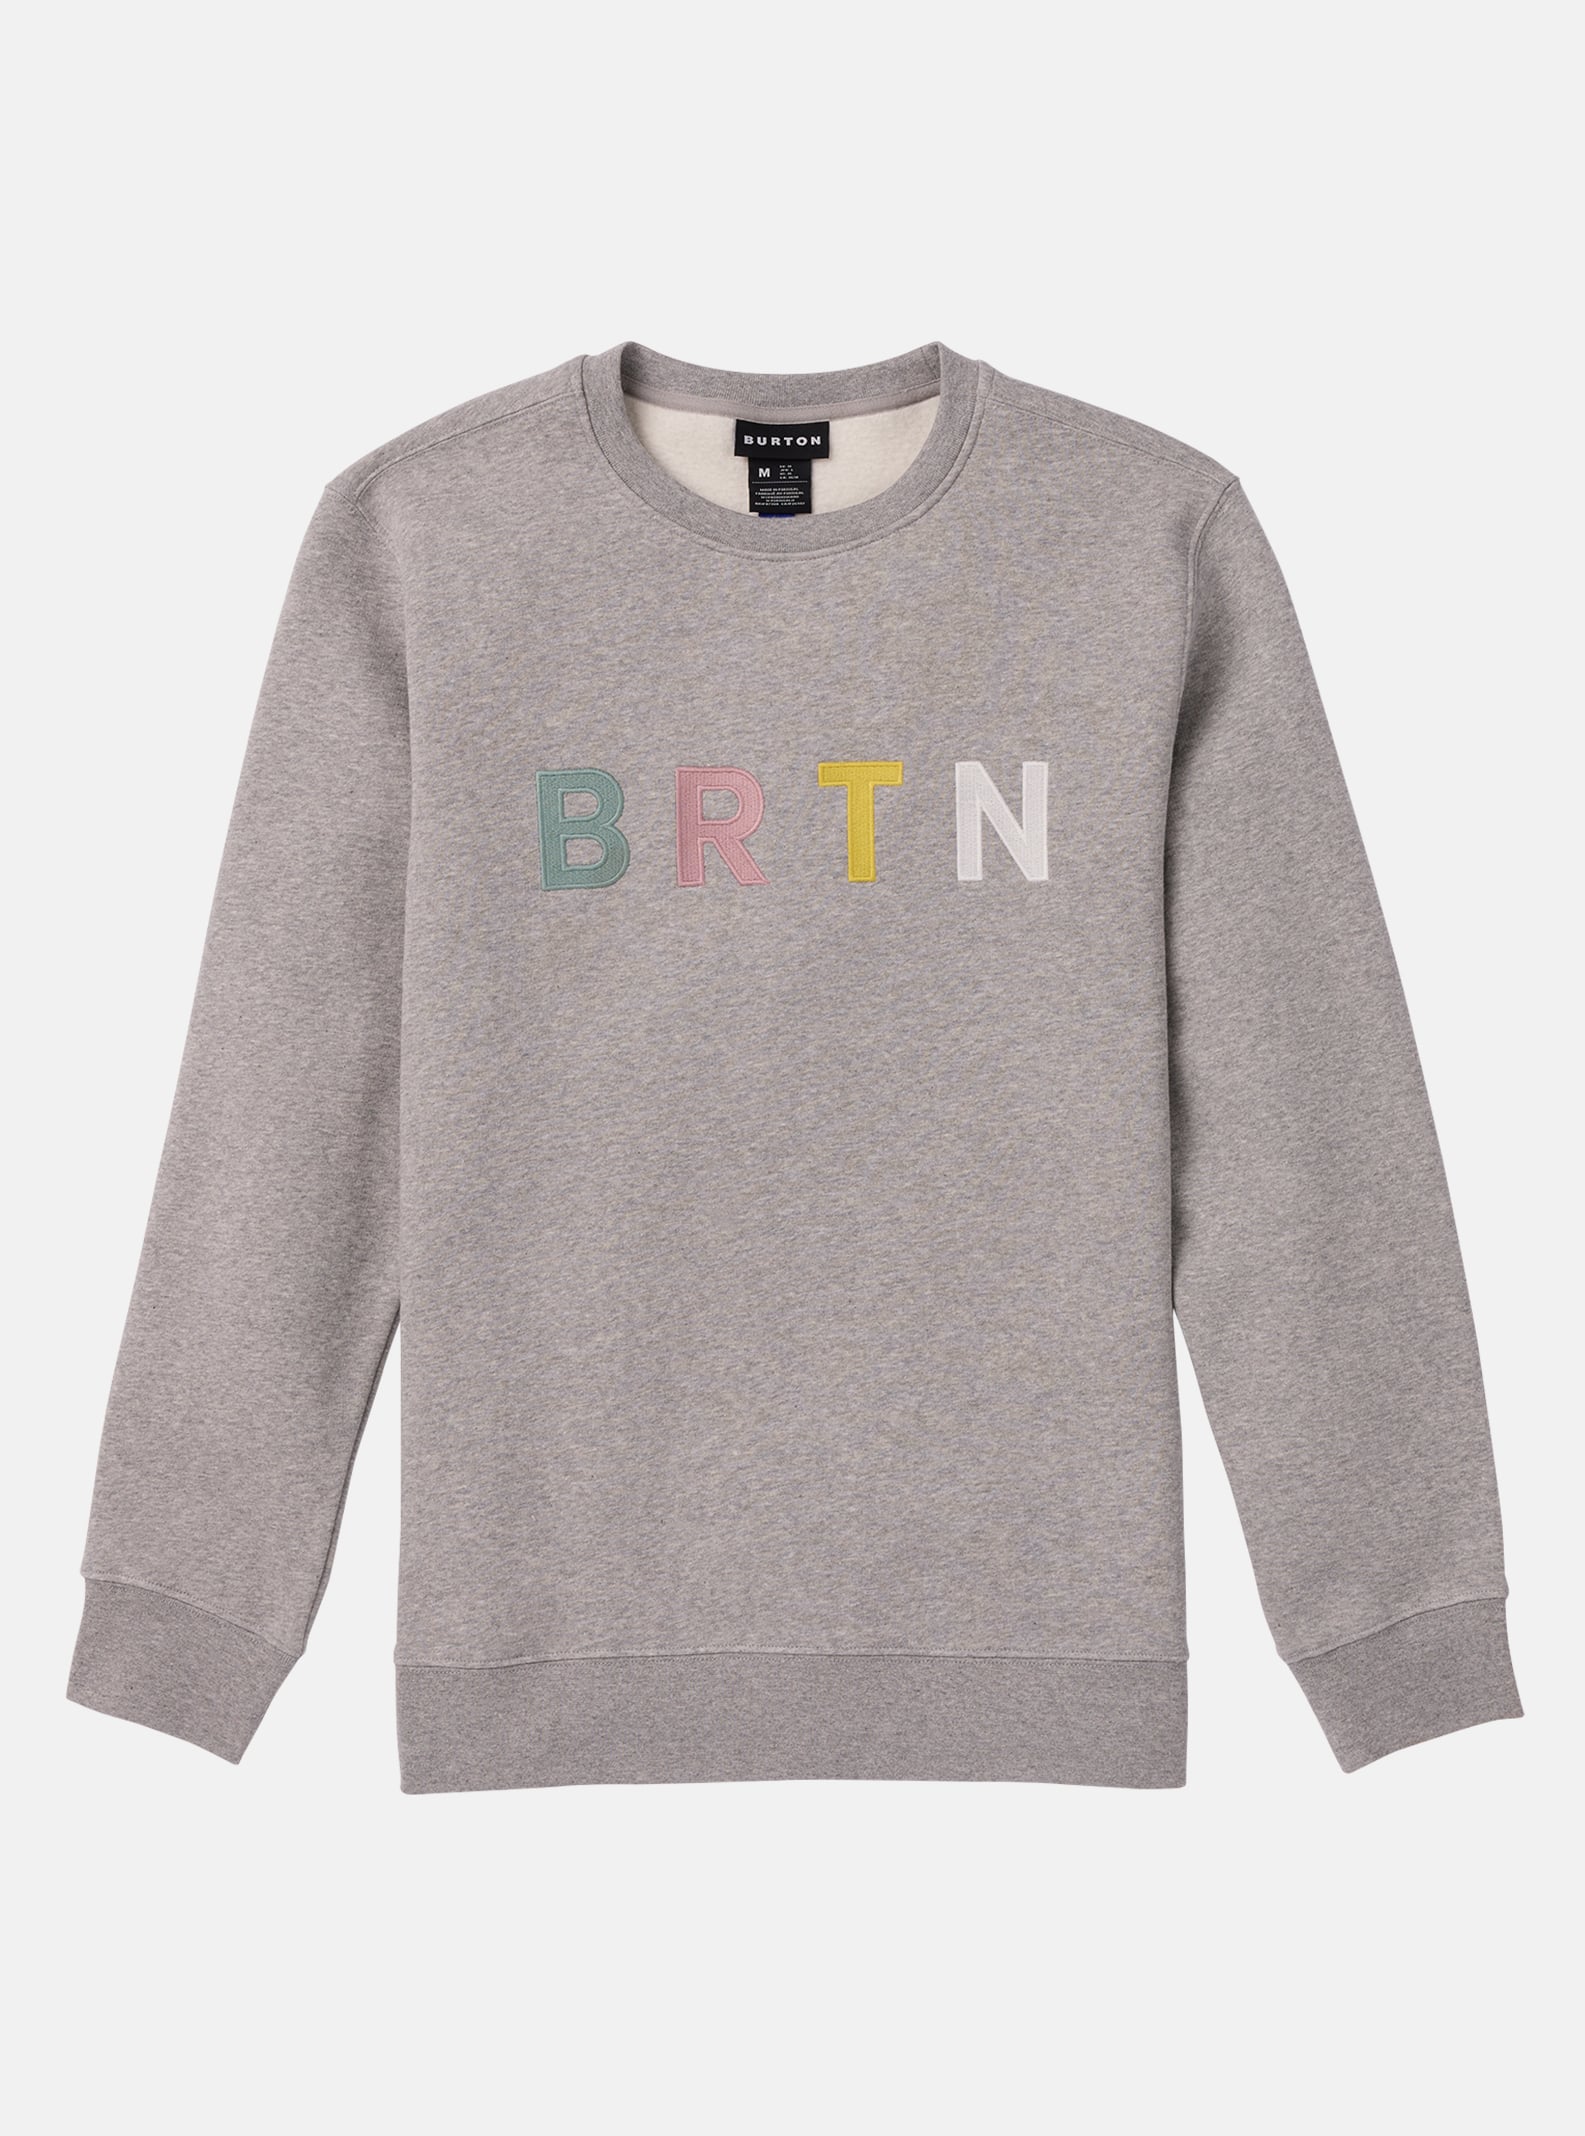 Burton Sweatshirt - BRTN Crewneck, Gray Heather Multi, L